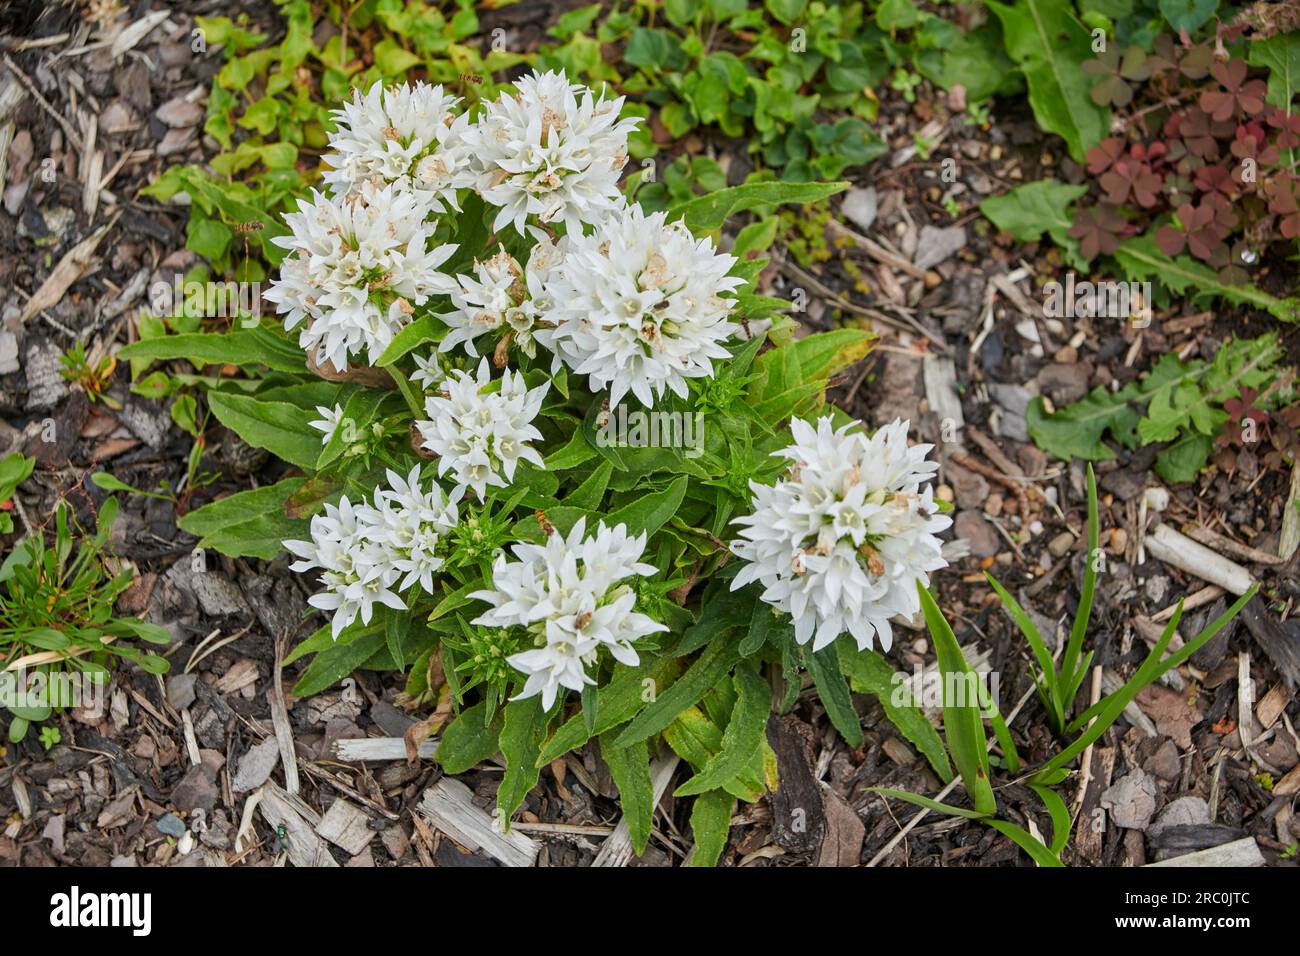 Campanula 'alba' ( Campanula glomerata 'alba') Clustered Bellflower flowering during the summer months. Stock Photo